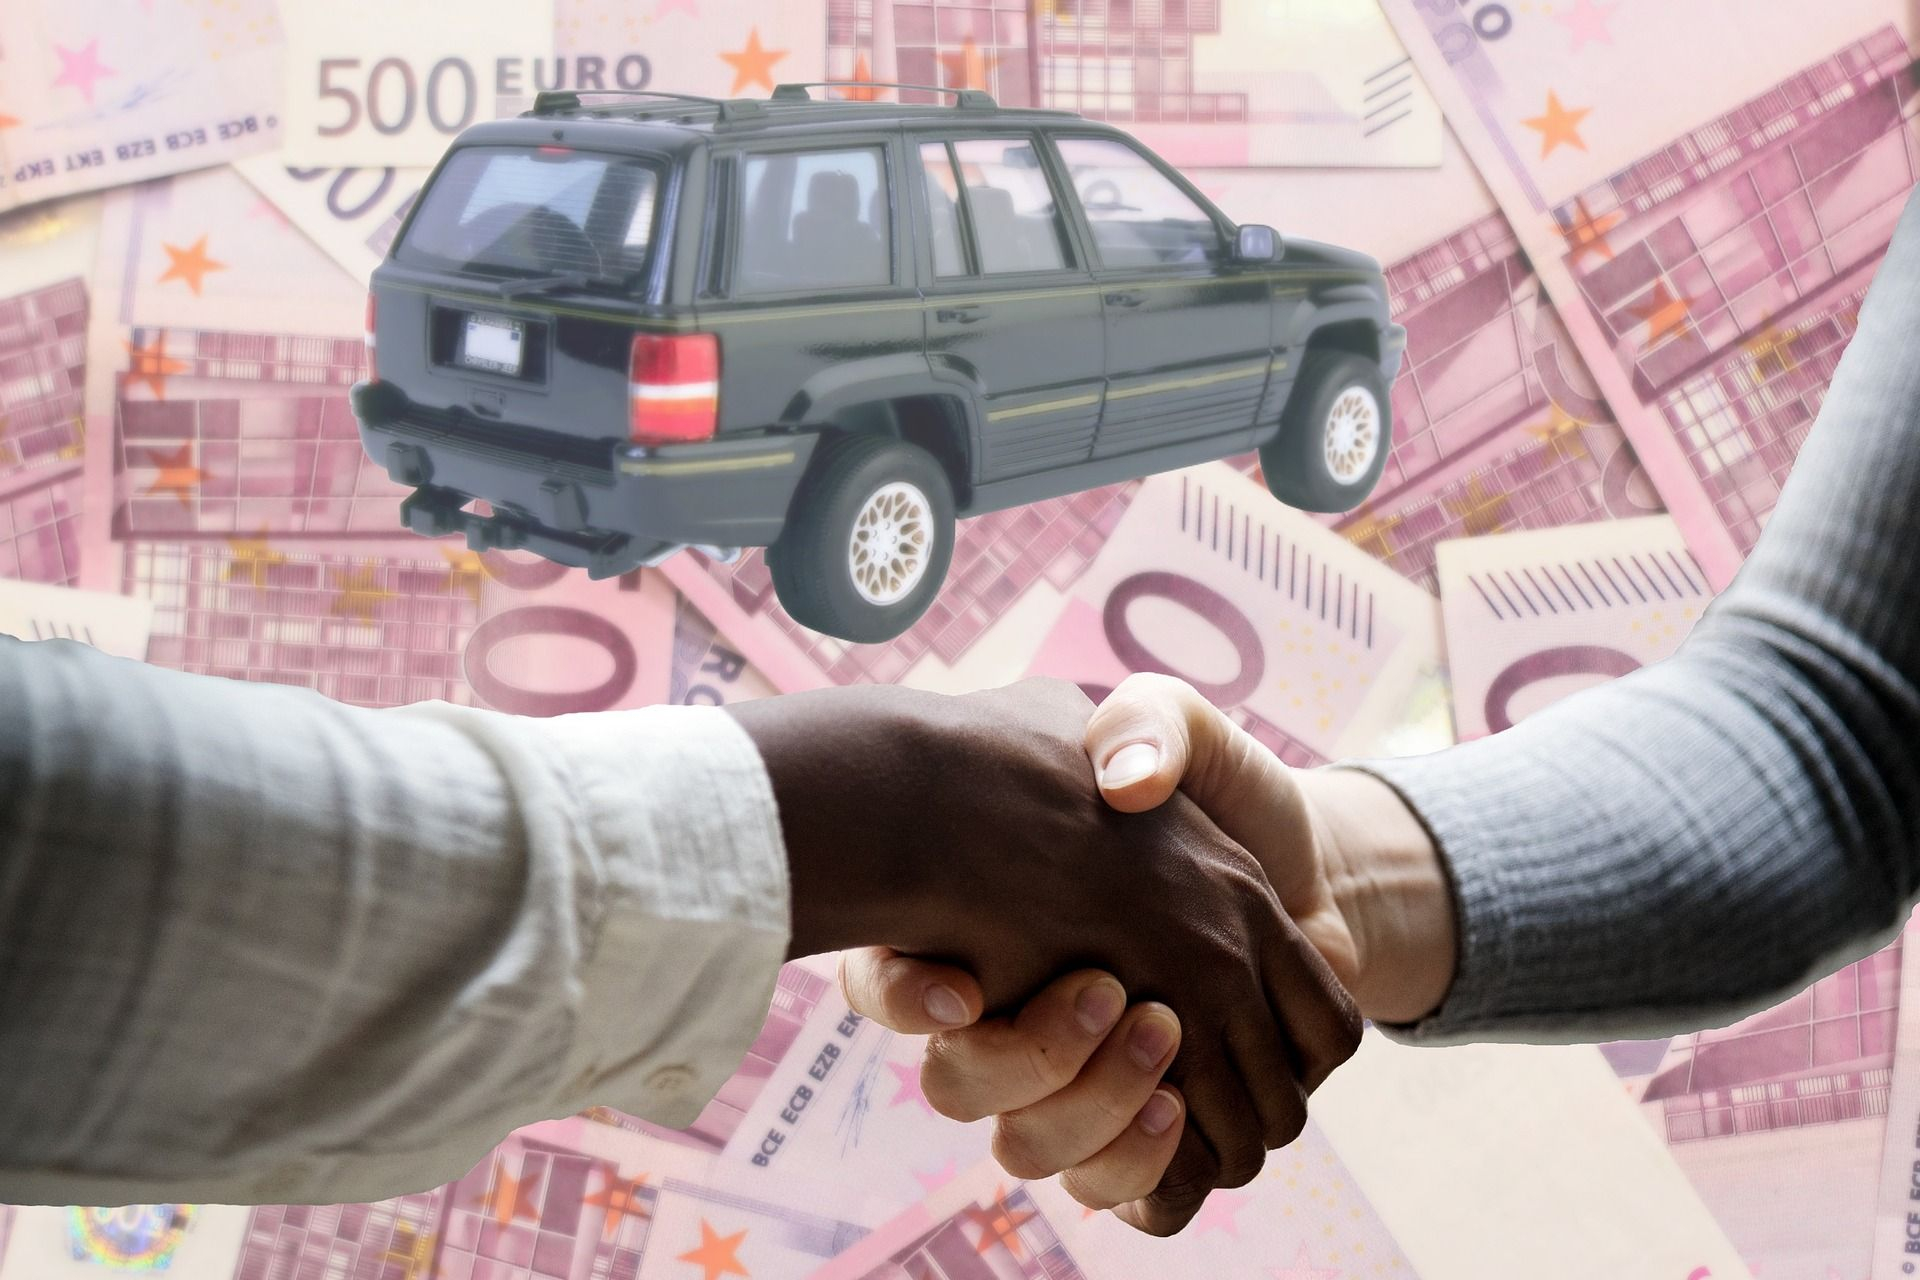 Tweedehands auto kopen particulier dealer? hier de tips - Autoreview.nl - AutoReview.nl